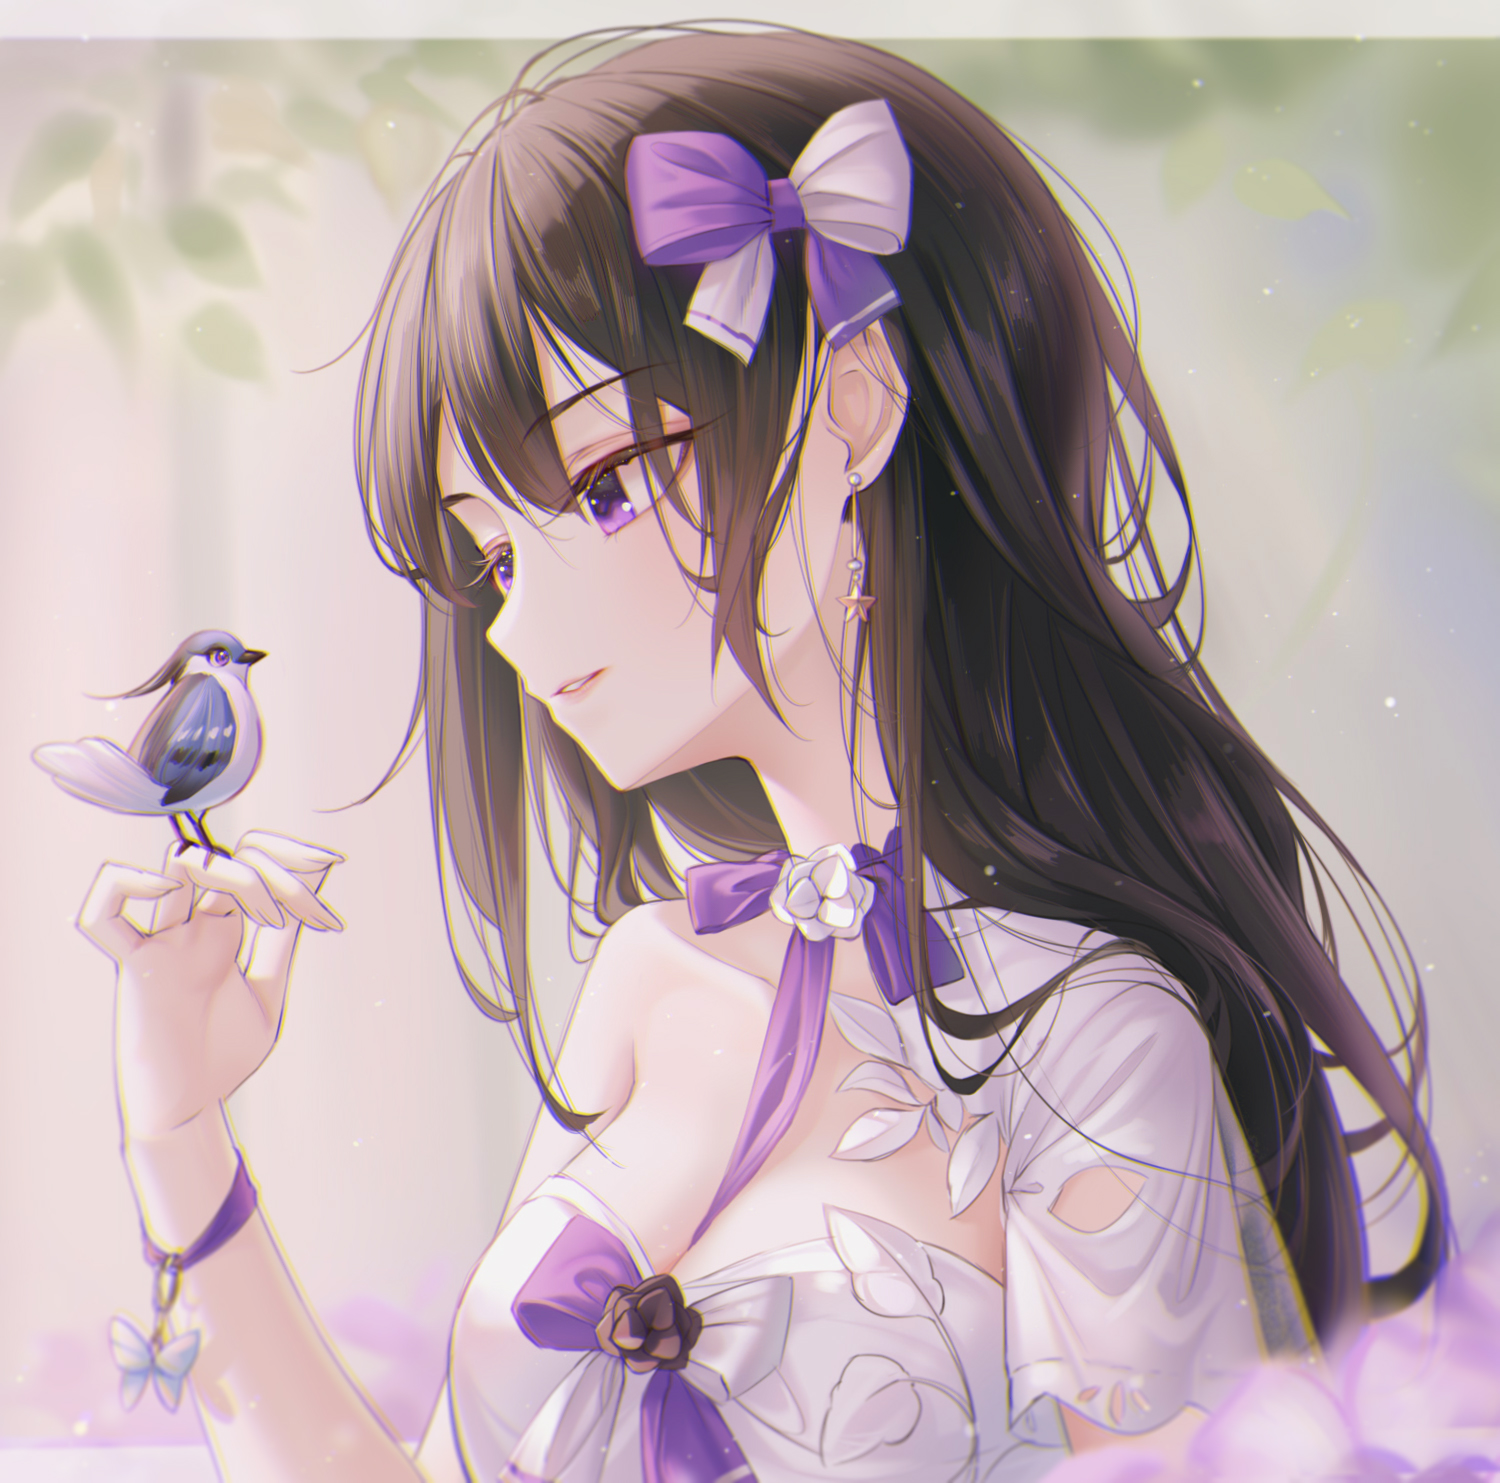 Anime 1500x1483 anime anime girls birds long hair hair bows purple eyes bow tie animals petals earring